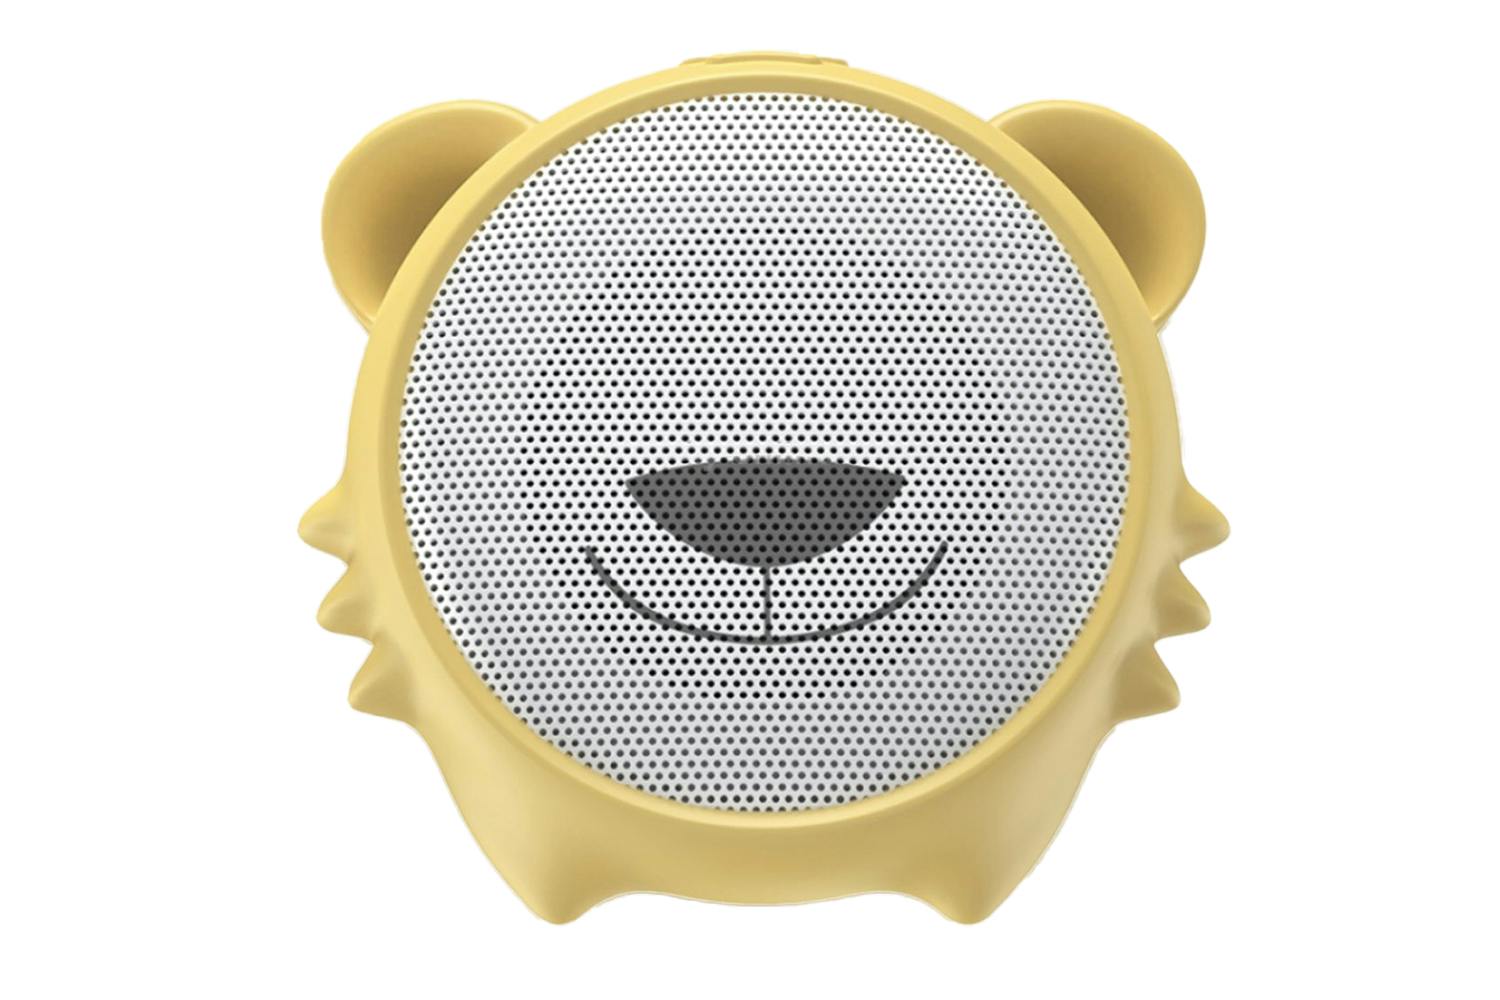 SBS Musichero Tiger-Shaped Bluetooth Wireless Speaker | Yellow